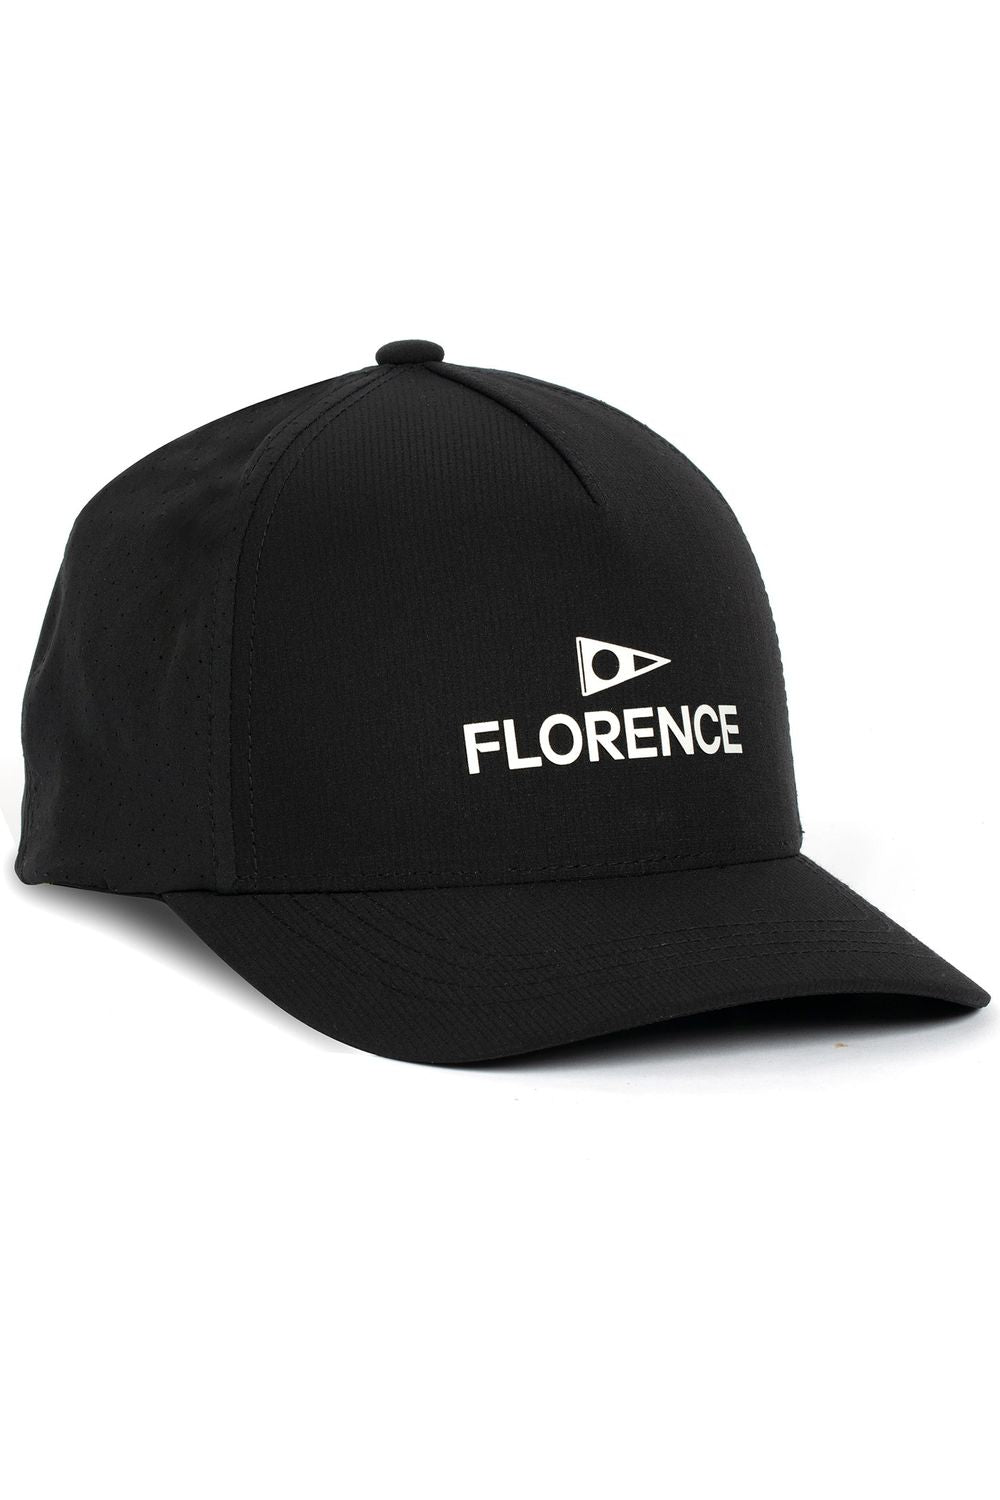 Florence Marine X Airtex Utility Hat Black